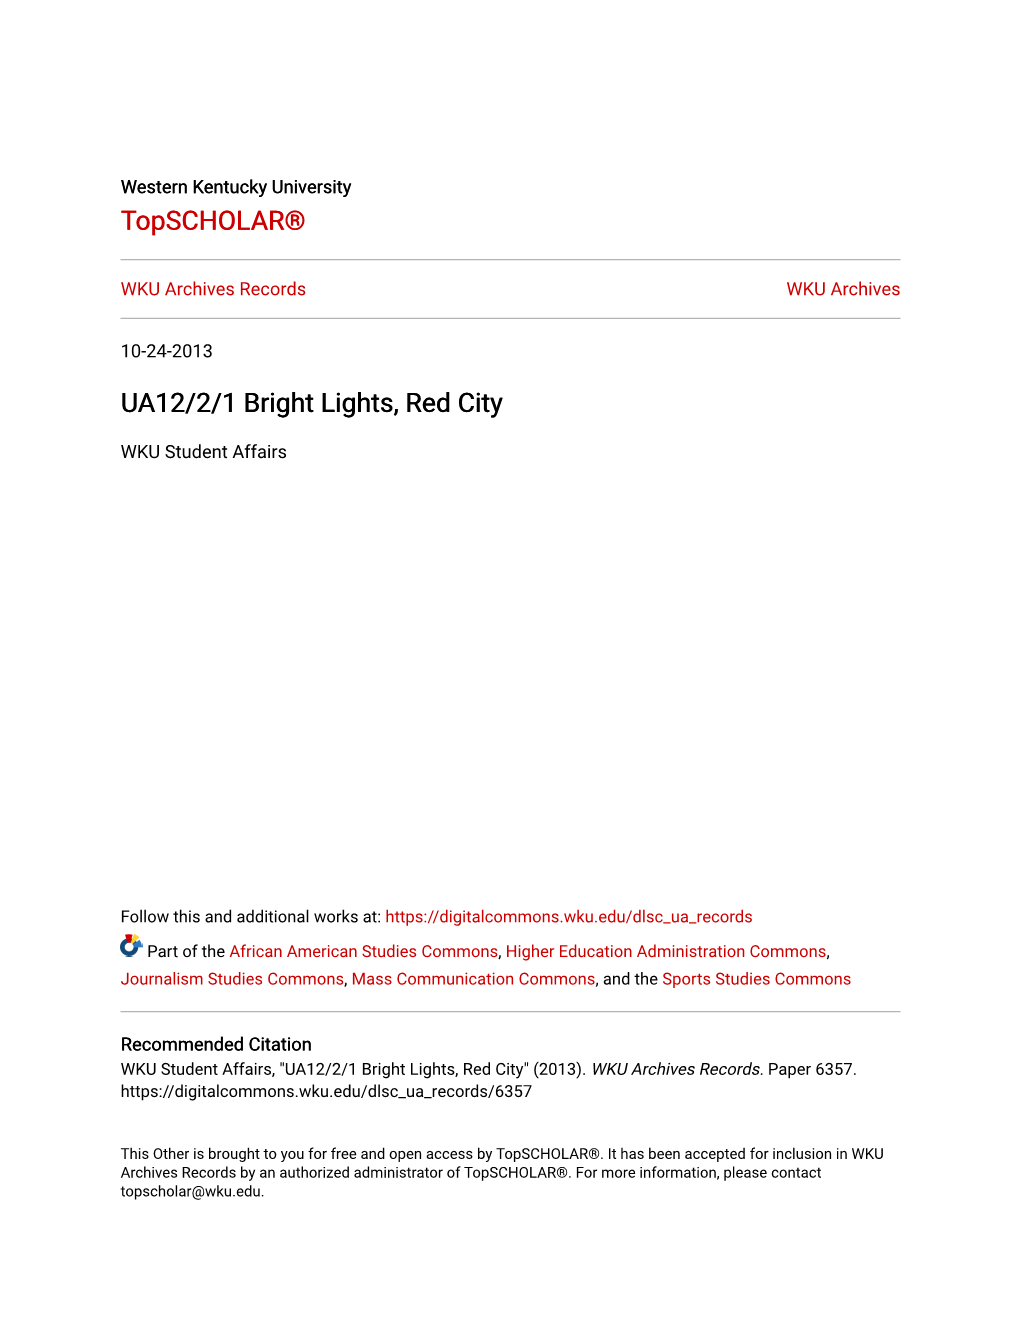 UA12/2/1 Bright Lights, Red City